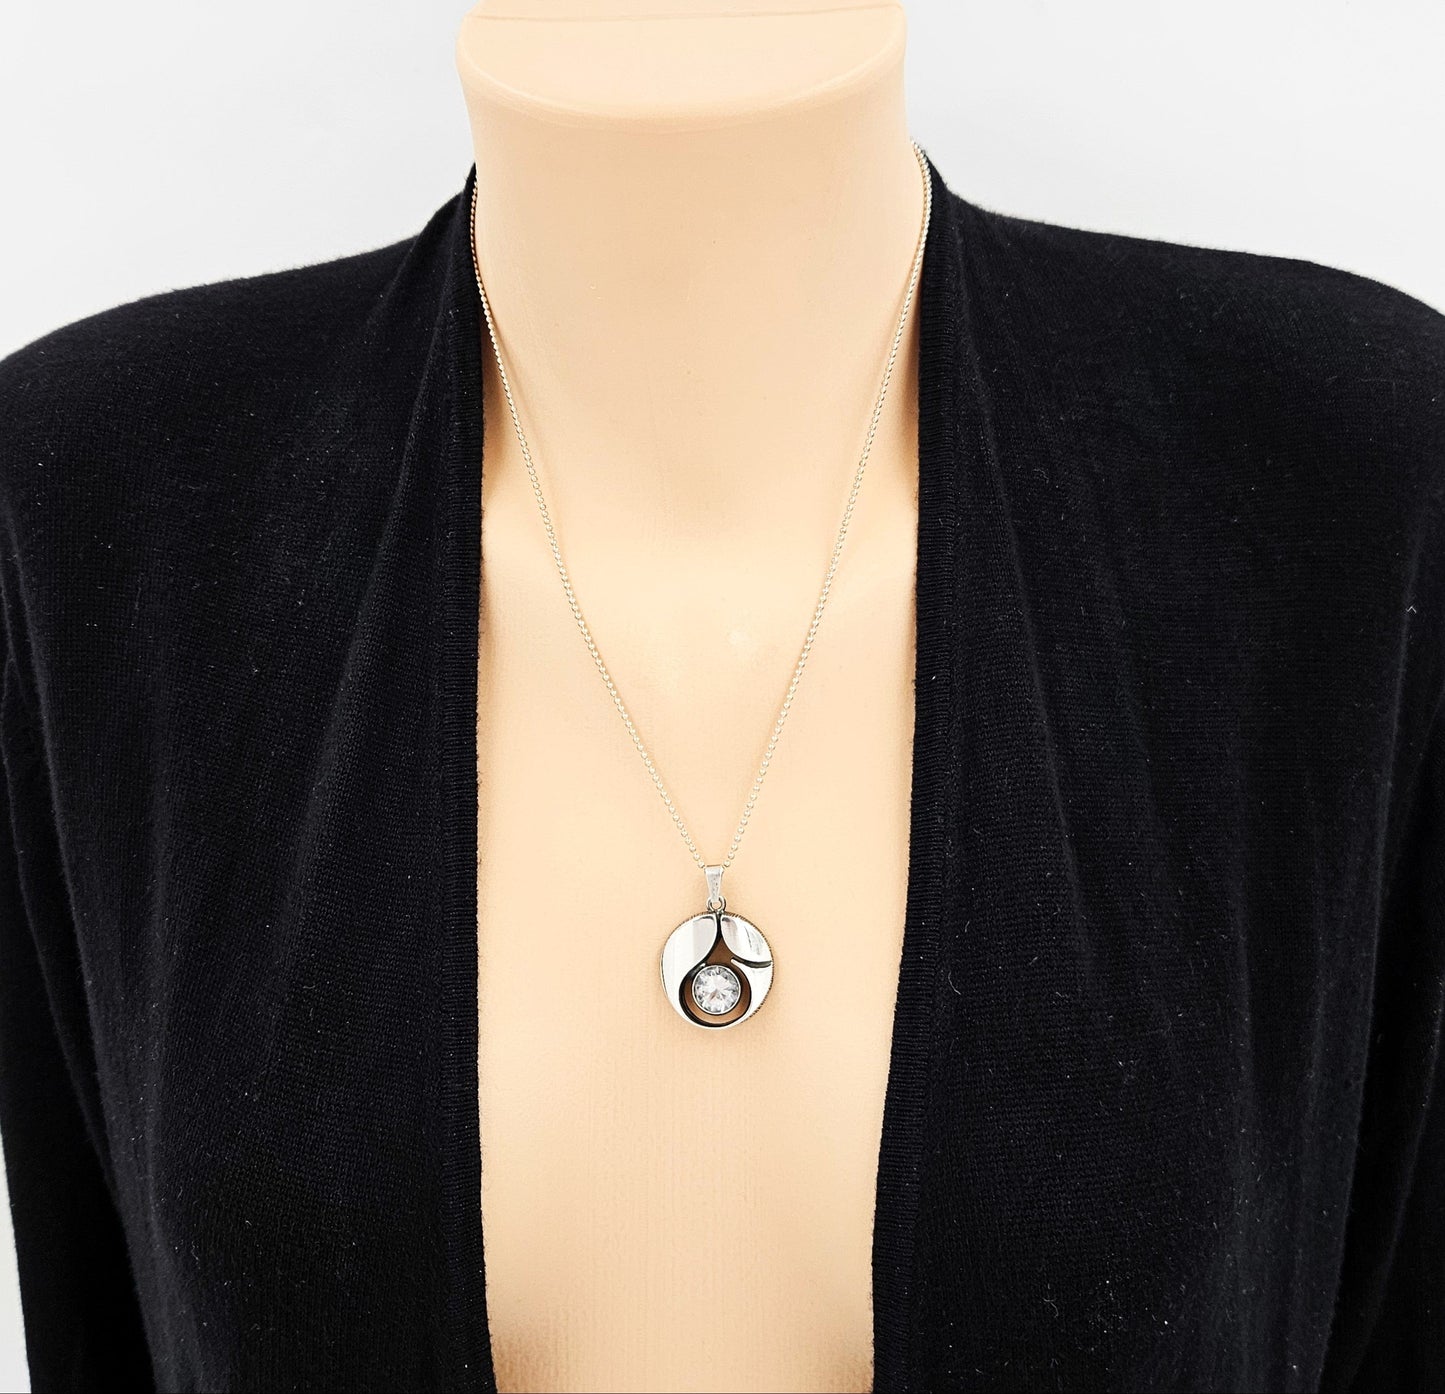 Karl Laine Jewelry Finnish Designer Karl Laine Modernist Sterling & Quartz Crystal Necklace 1960's